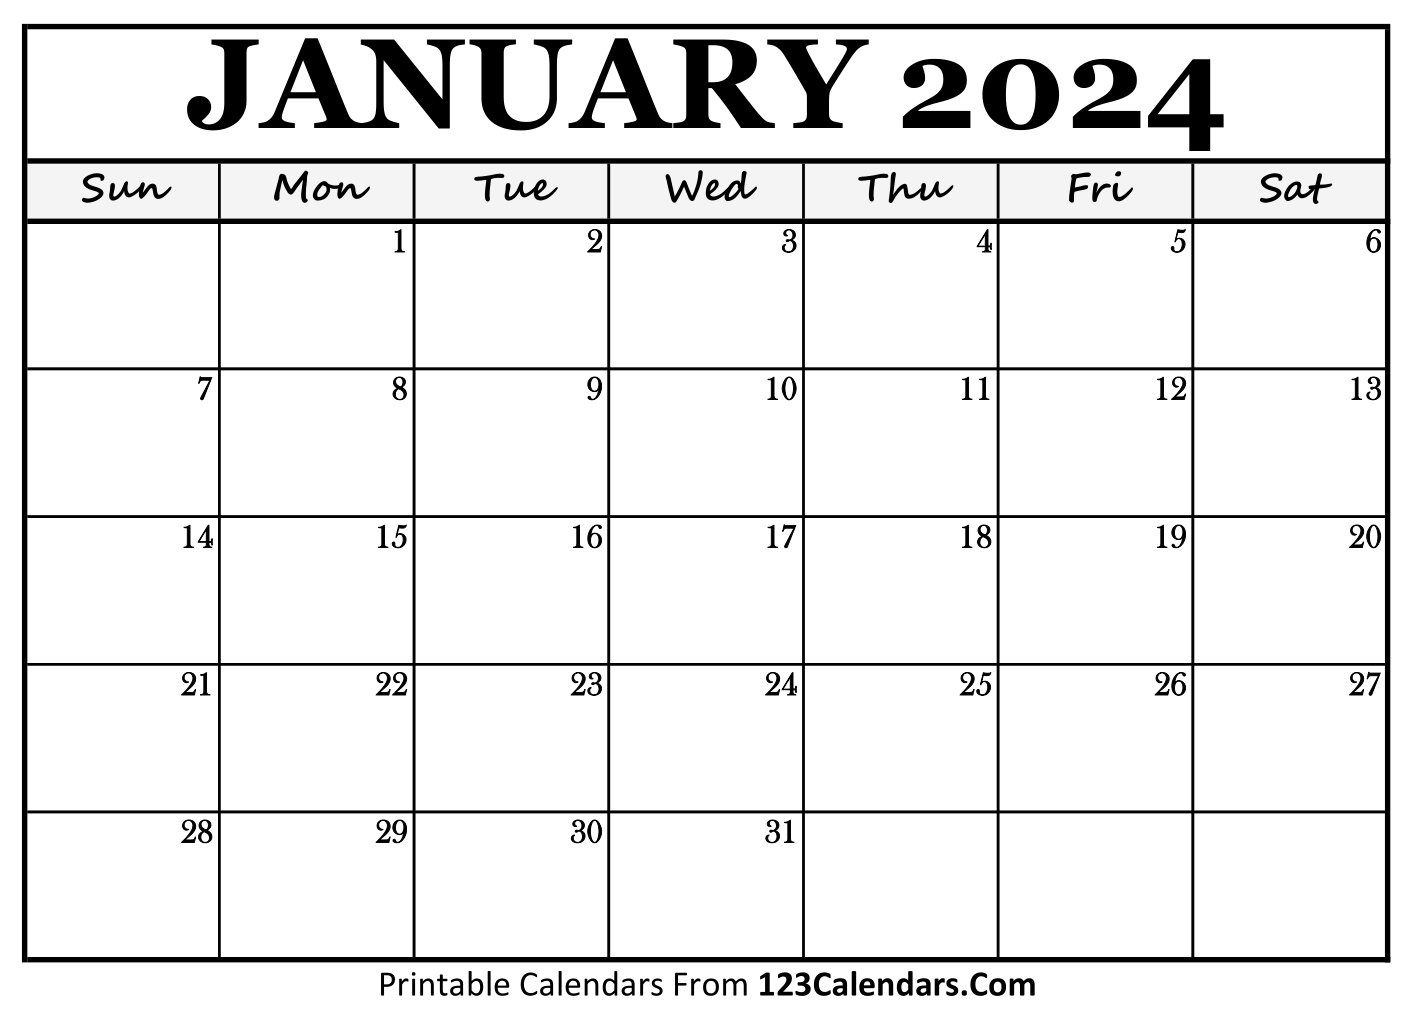 Printable January 2024 Calendar Templates - 123Calendars intended for Free Printable Blank Calendar January 2024 Calendar Template